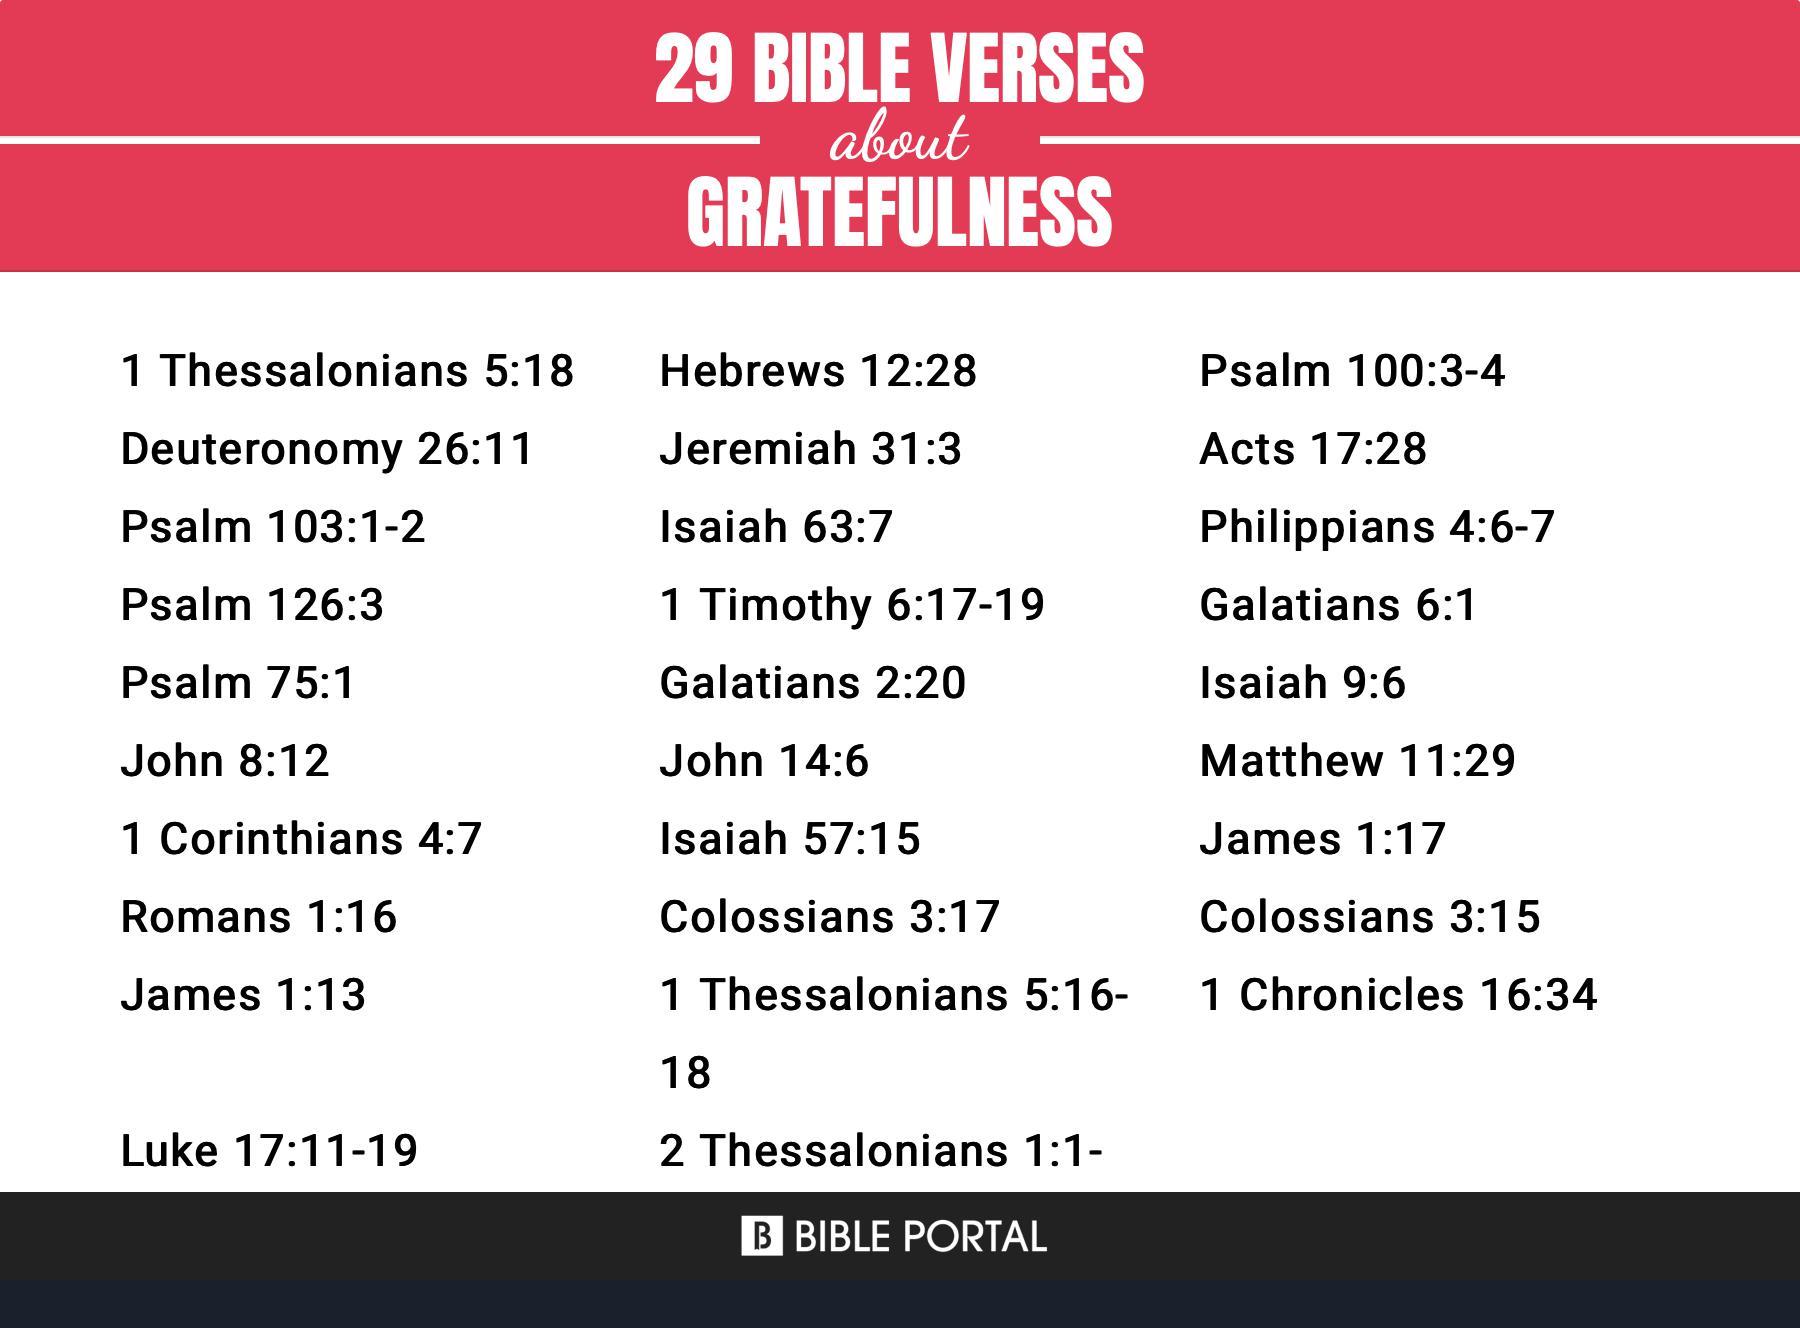 29 Bible Verses about Gratefulness